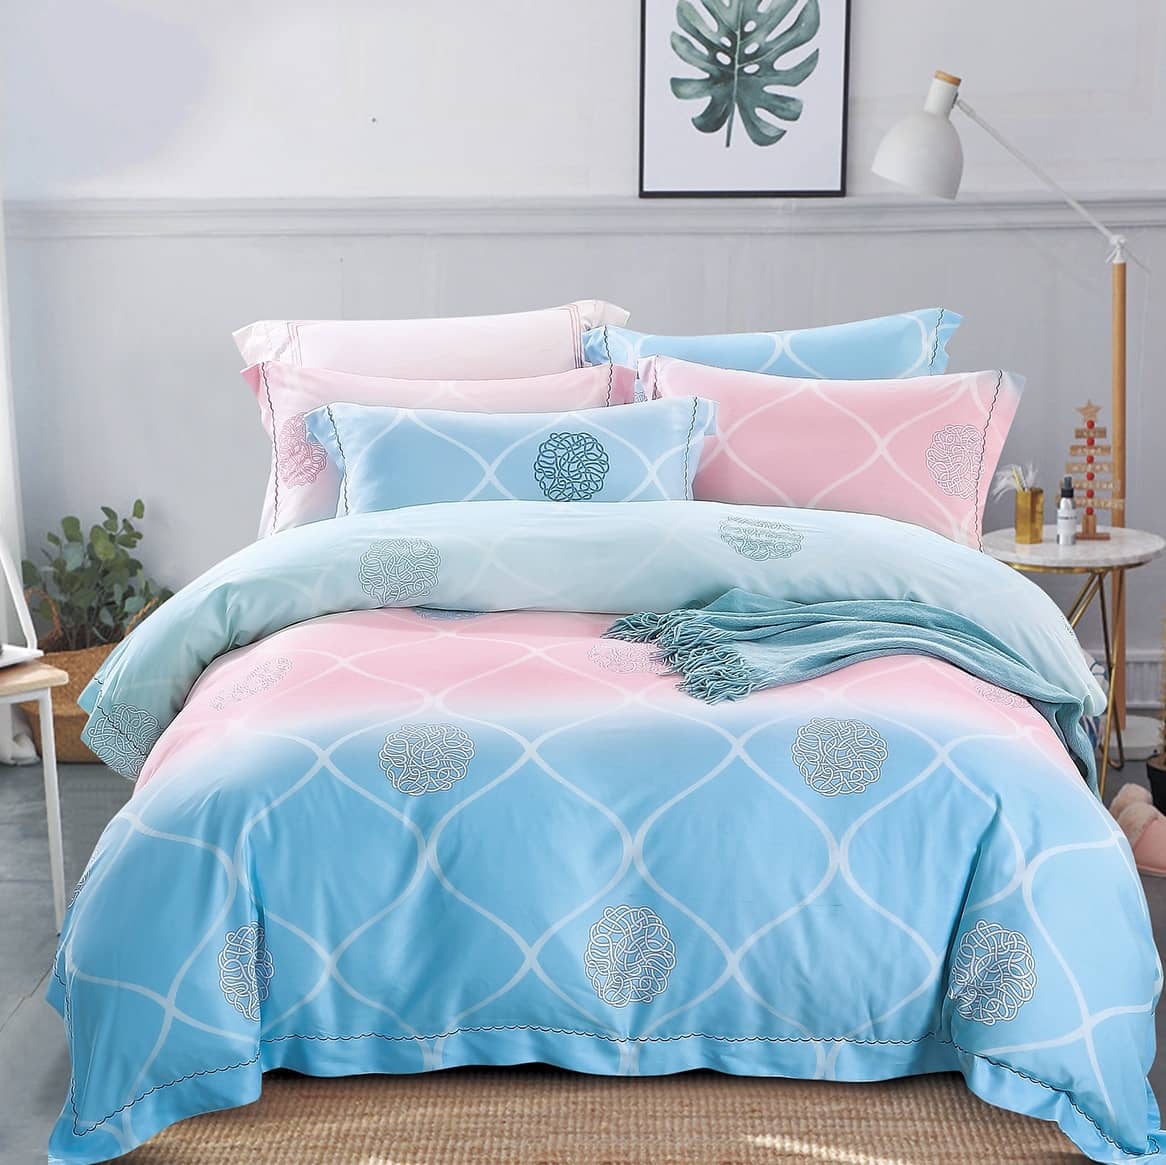 Luxury Modal Bedding and Comforter Set 